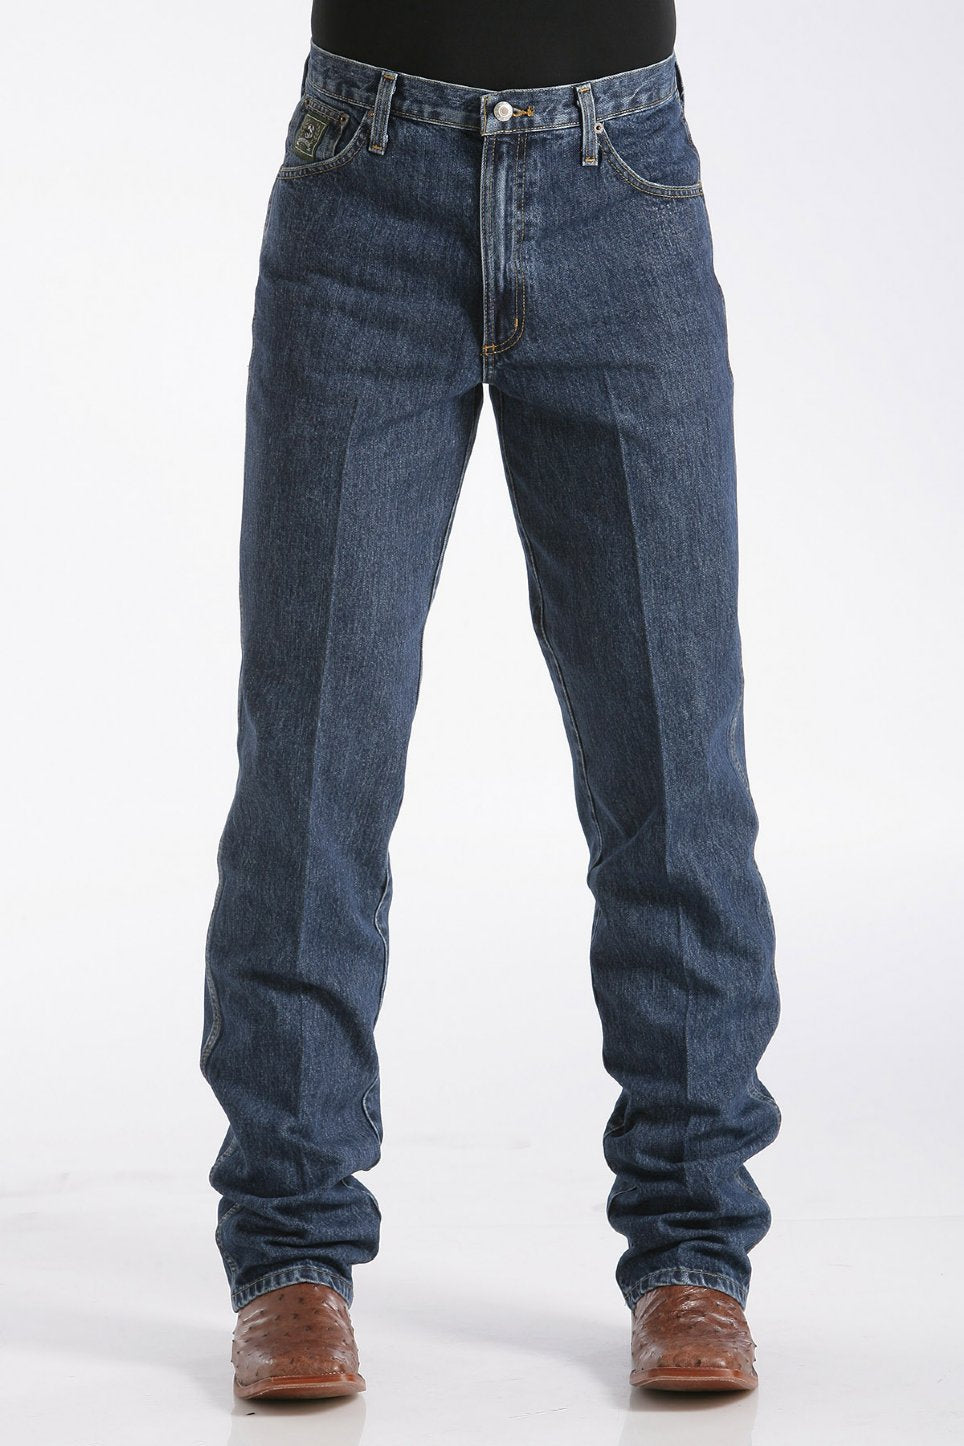 Cinch Mens Green Label Relaxed Fit Jeans 36 Inch Leg (Dark Stonewash)